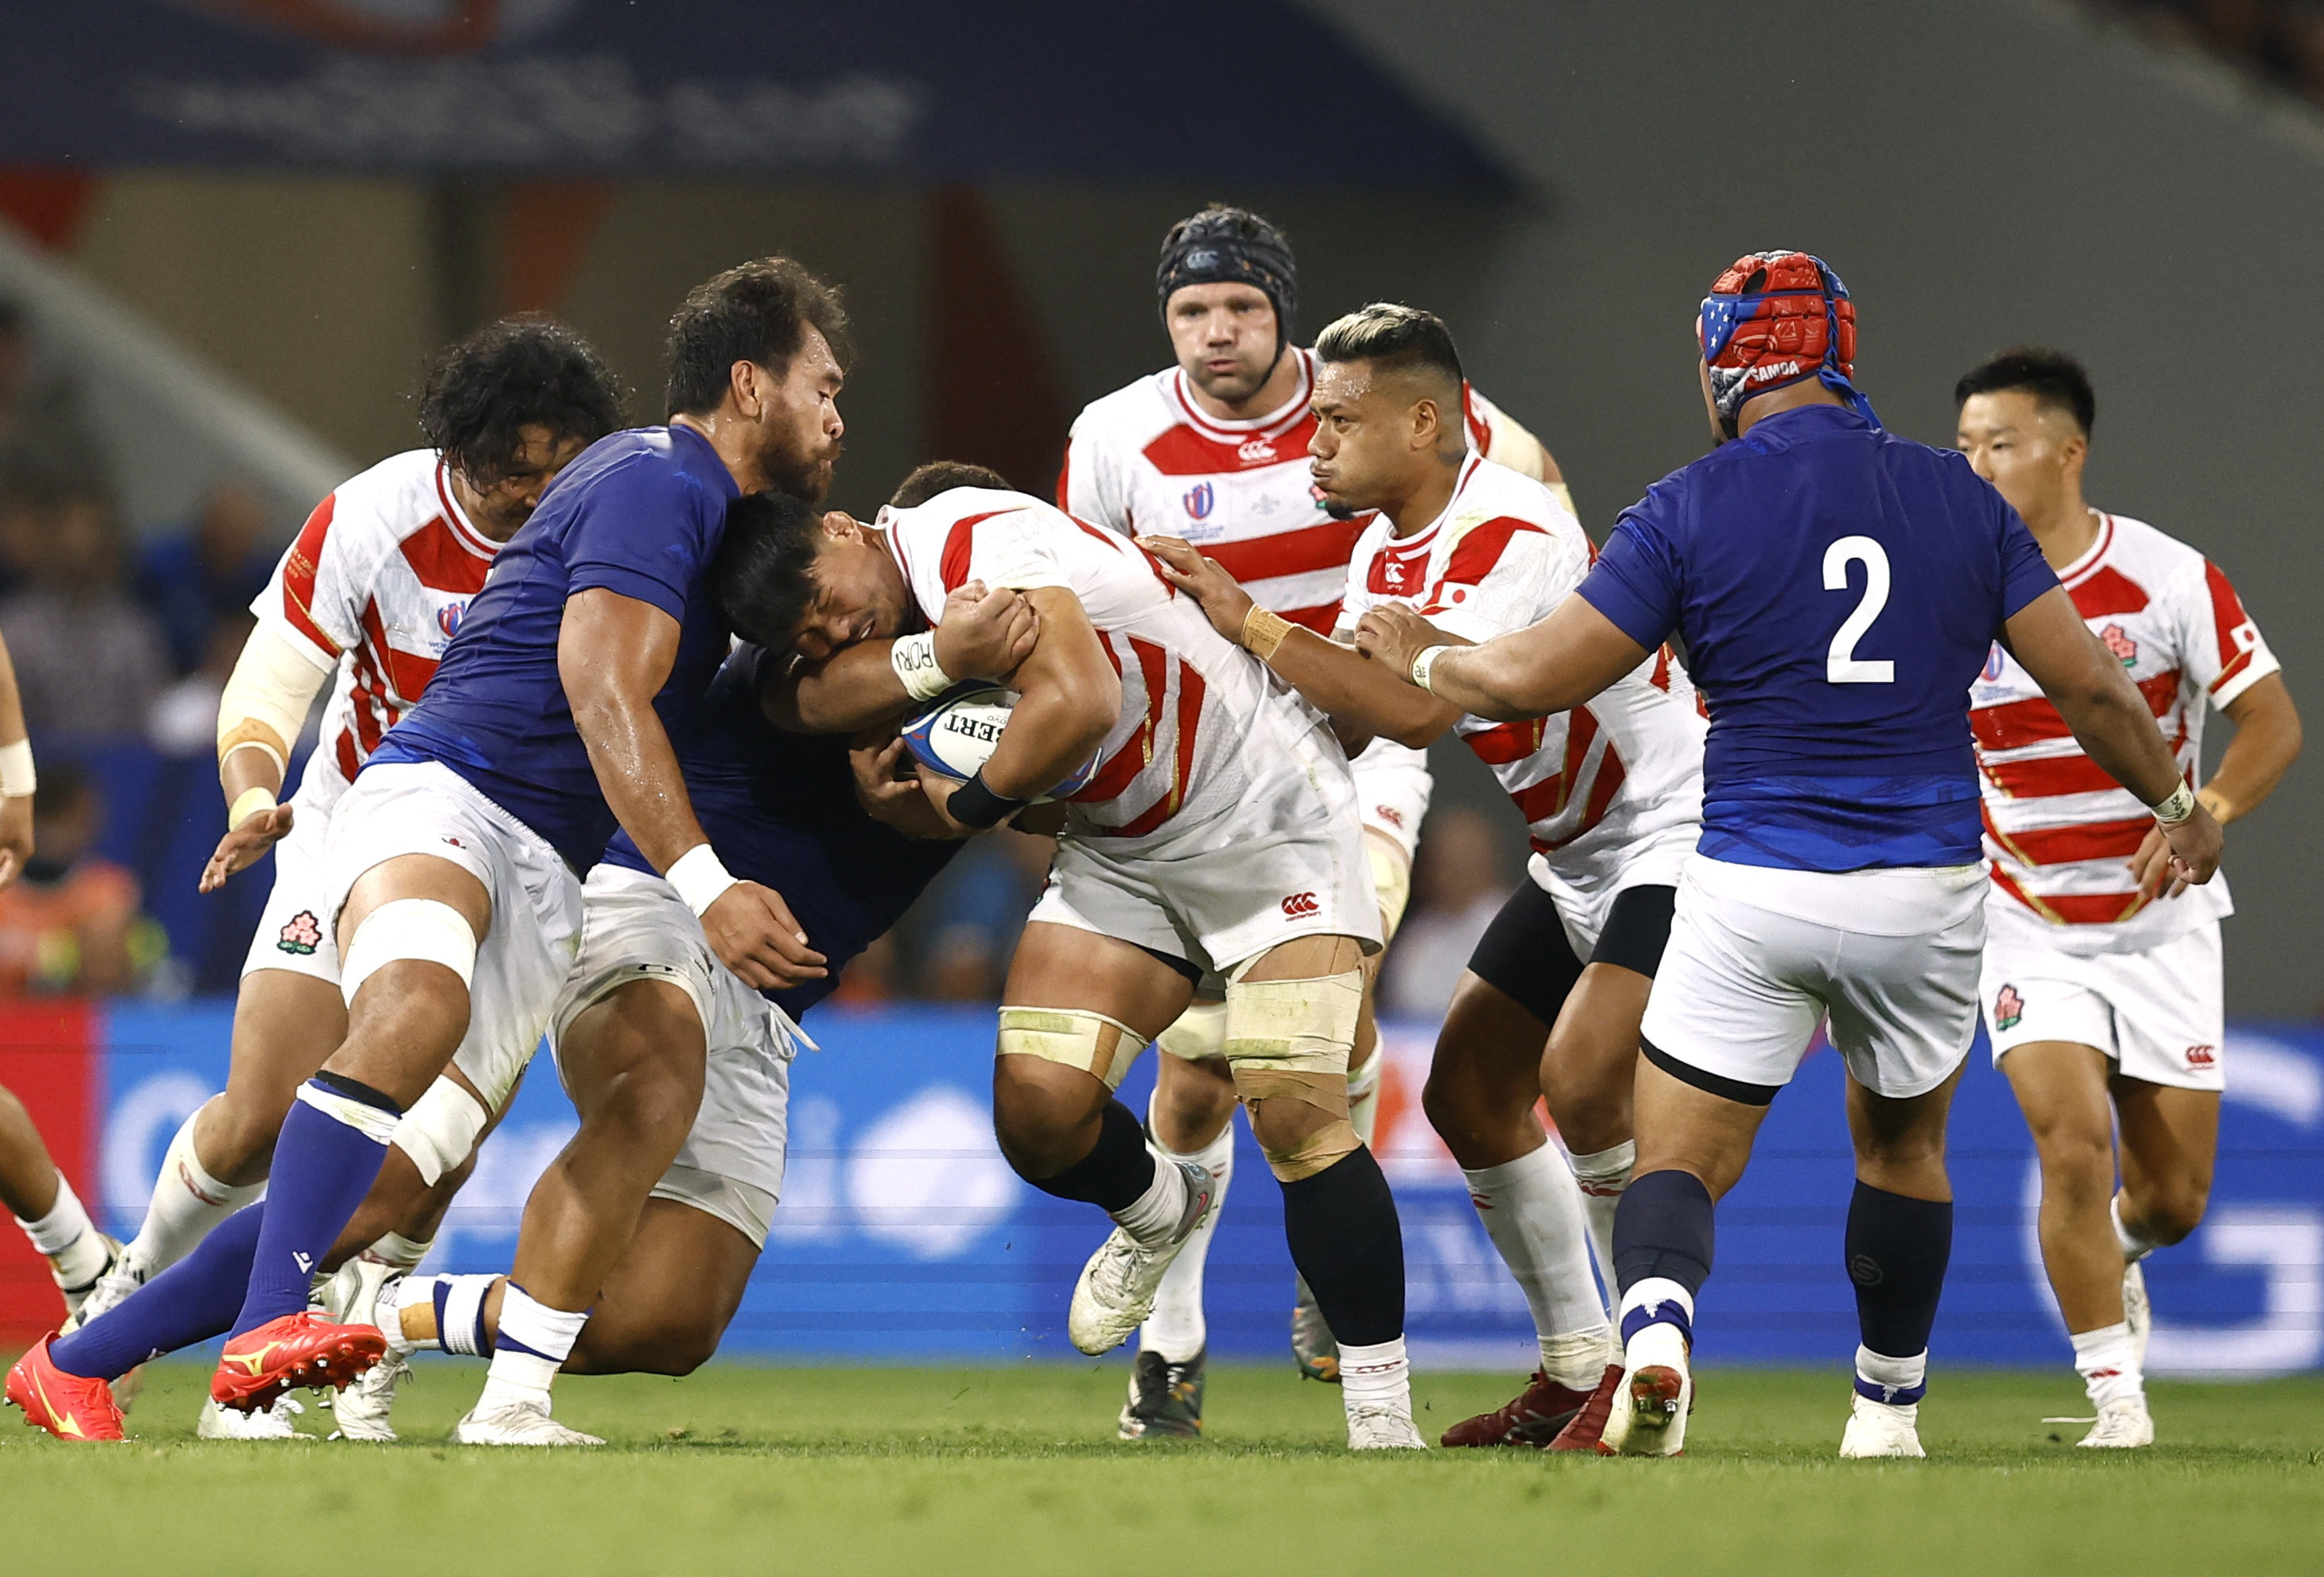 Samoa rue poor discipline in World Cup defeat to Japan | Reuters